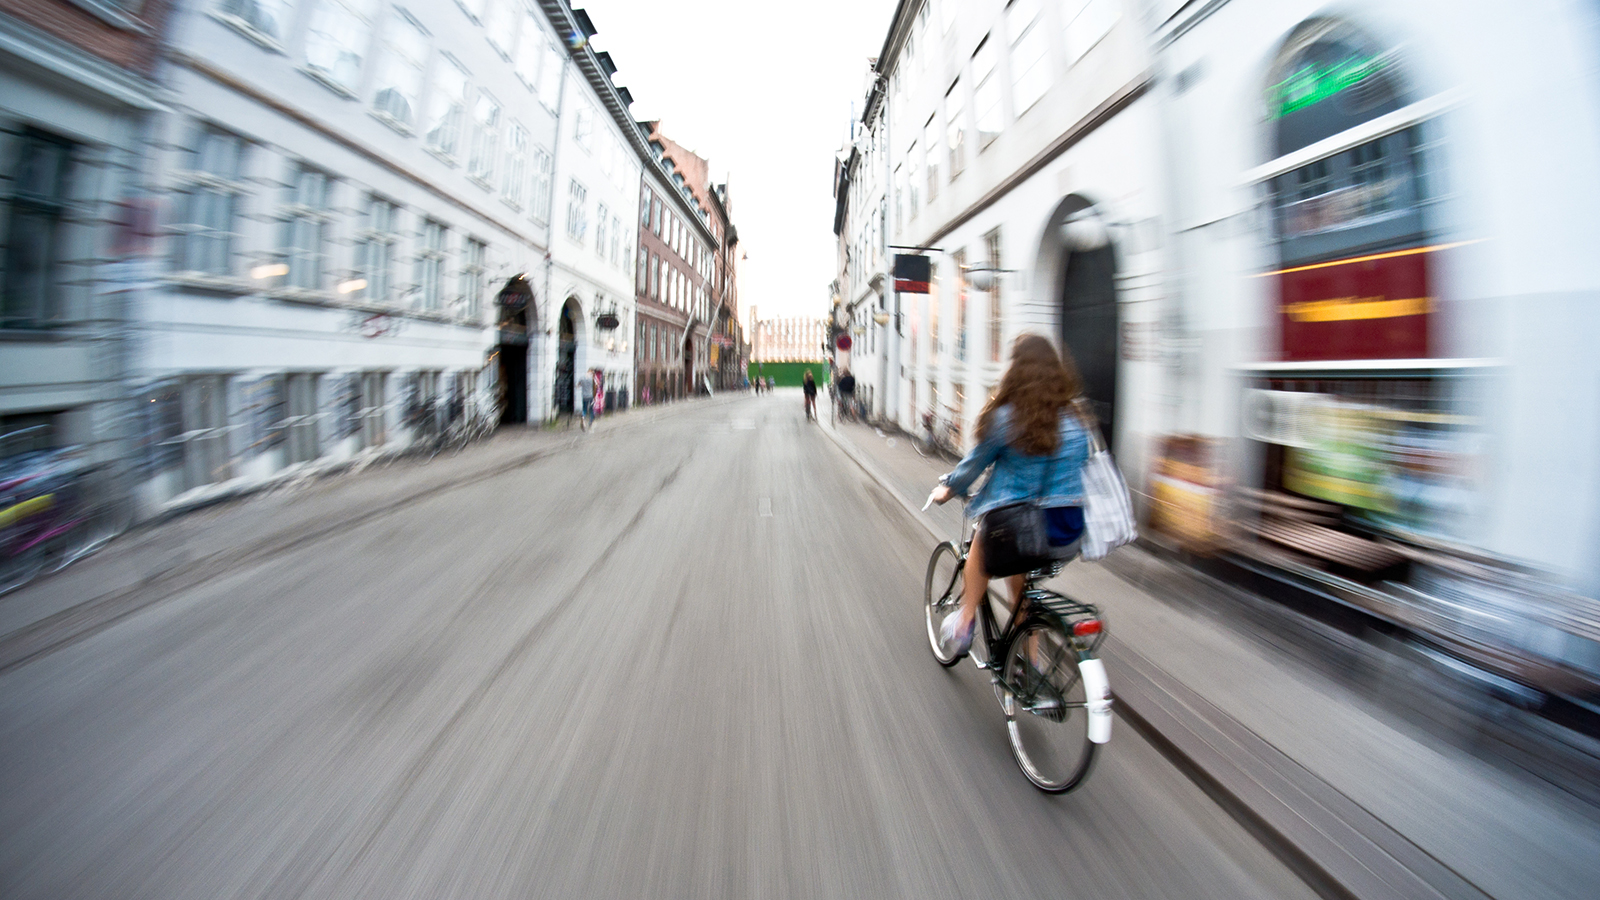 Girl on bike riding fast - motion blur; Shutterstock ID 119830294; PO: New Kids Website